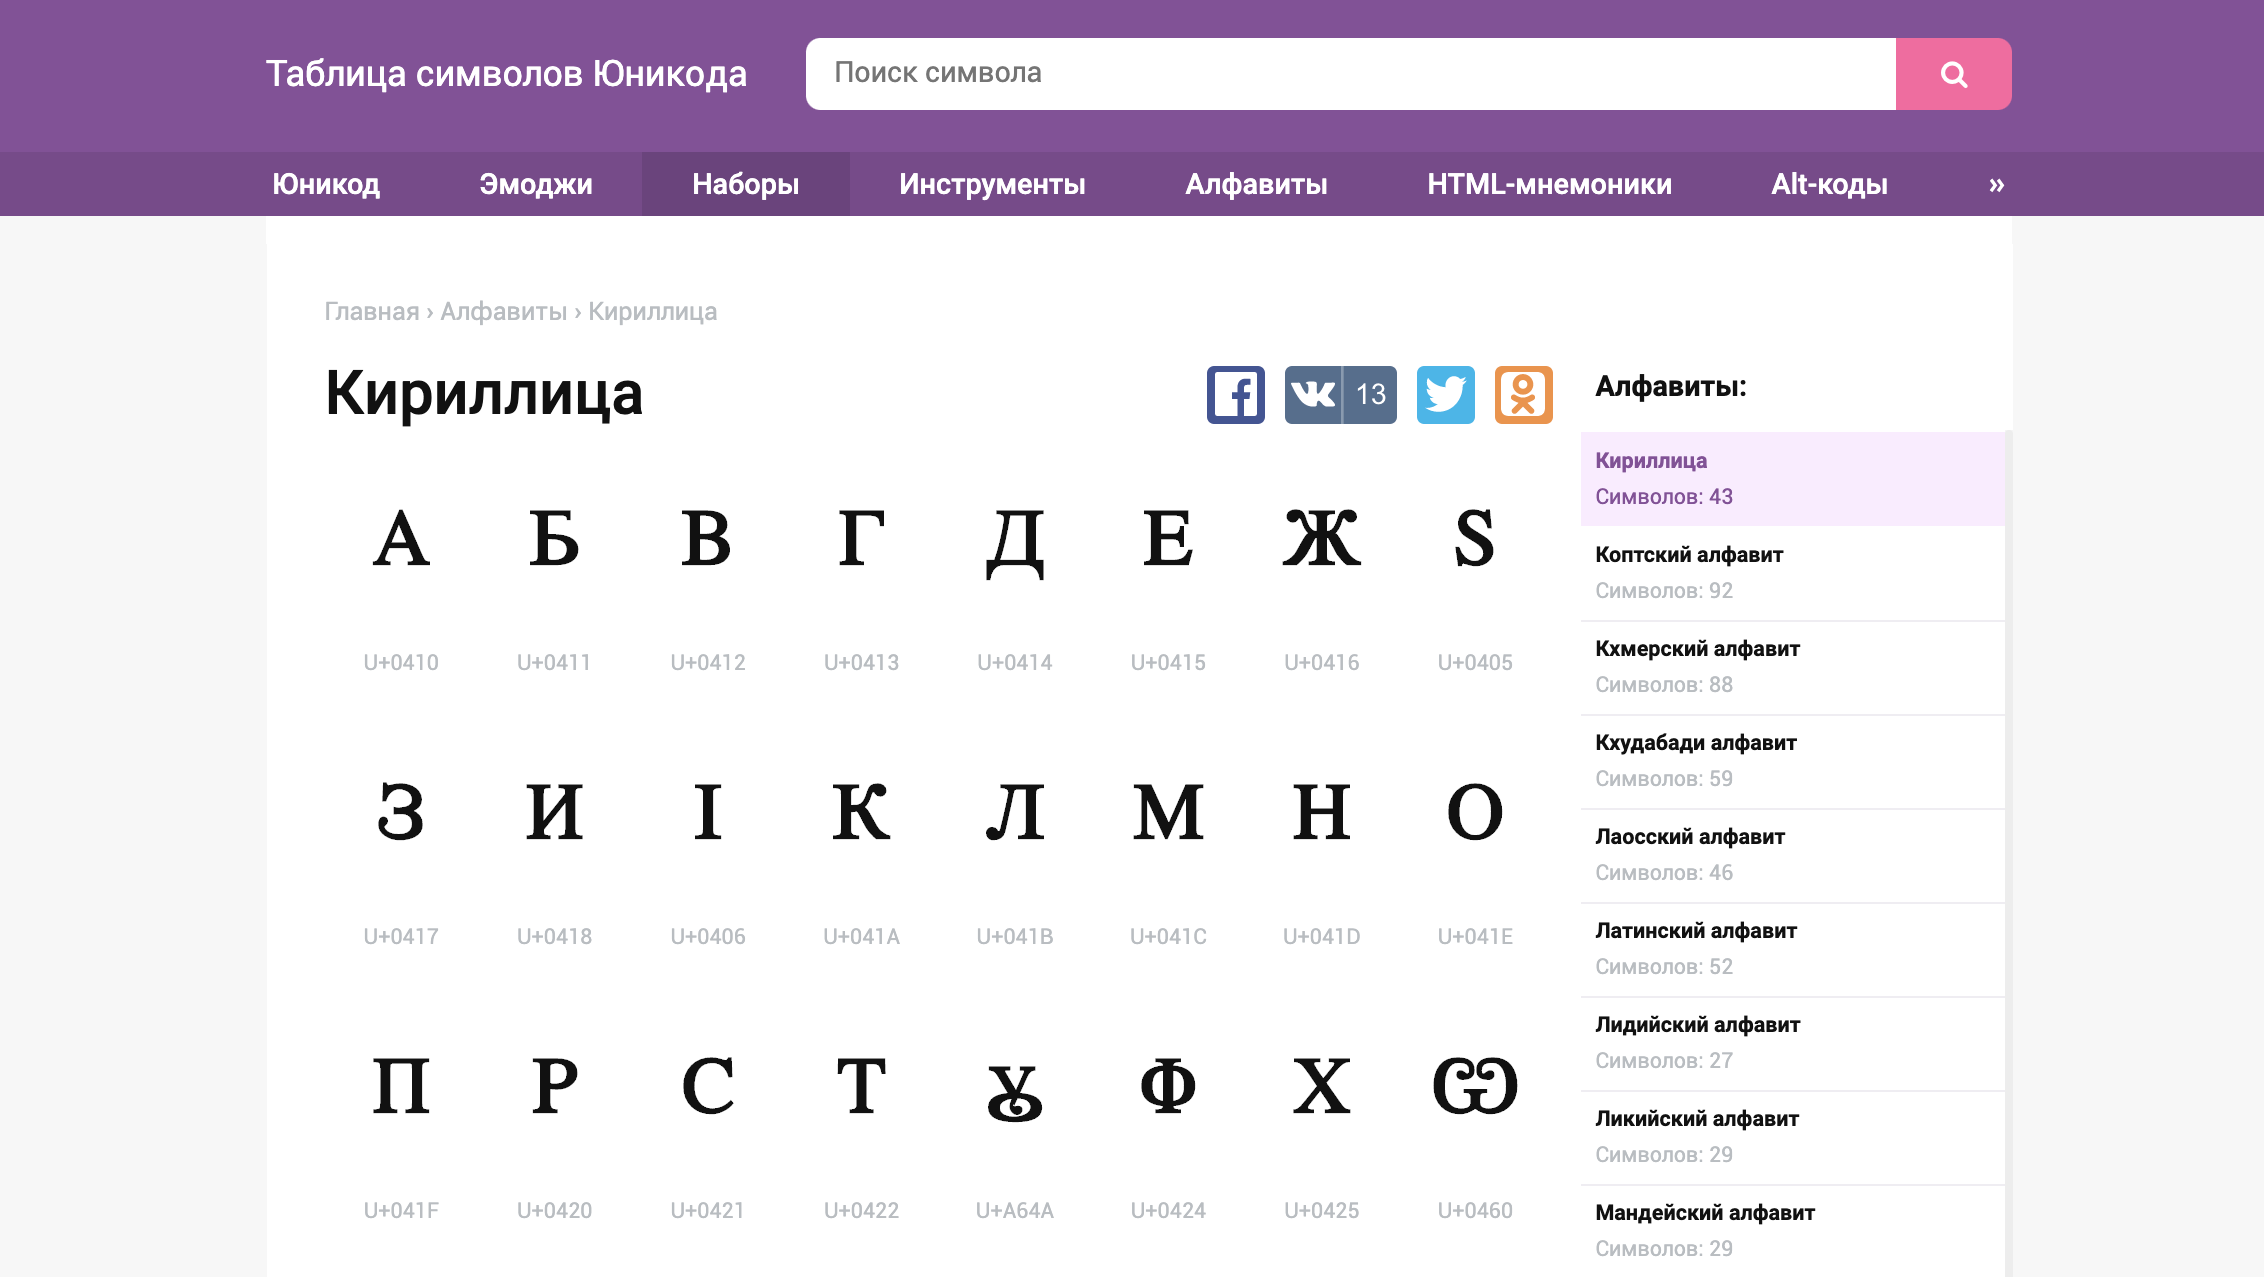 Unicode table - encyclopedia of unicode symbols